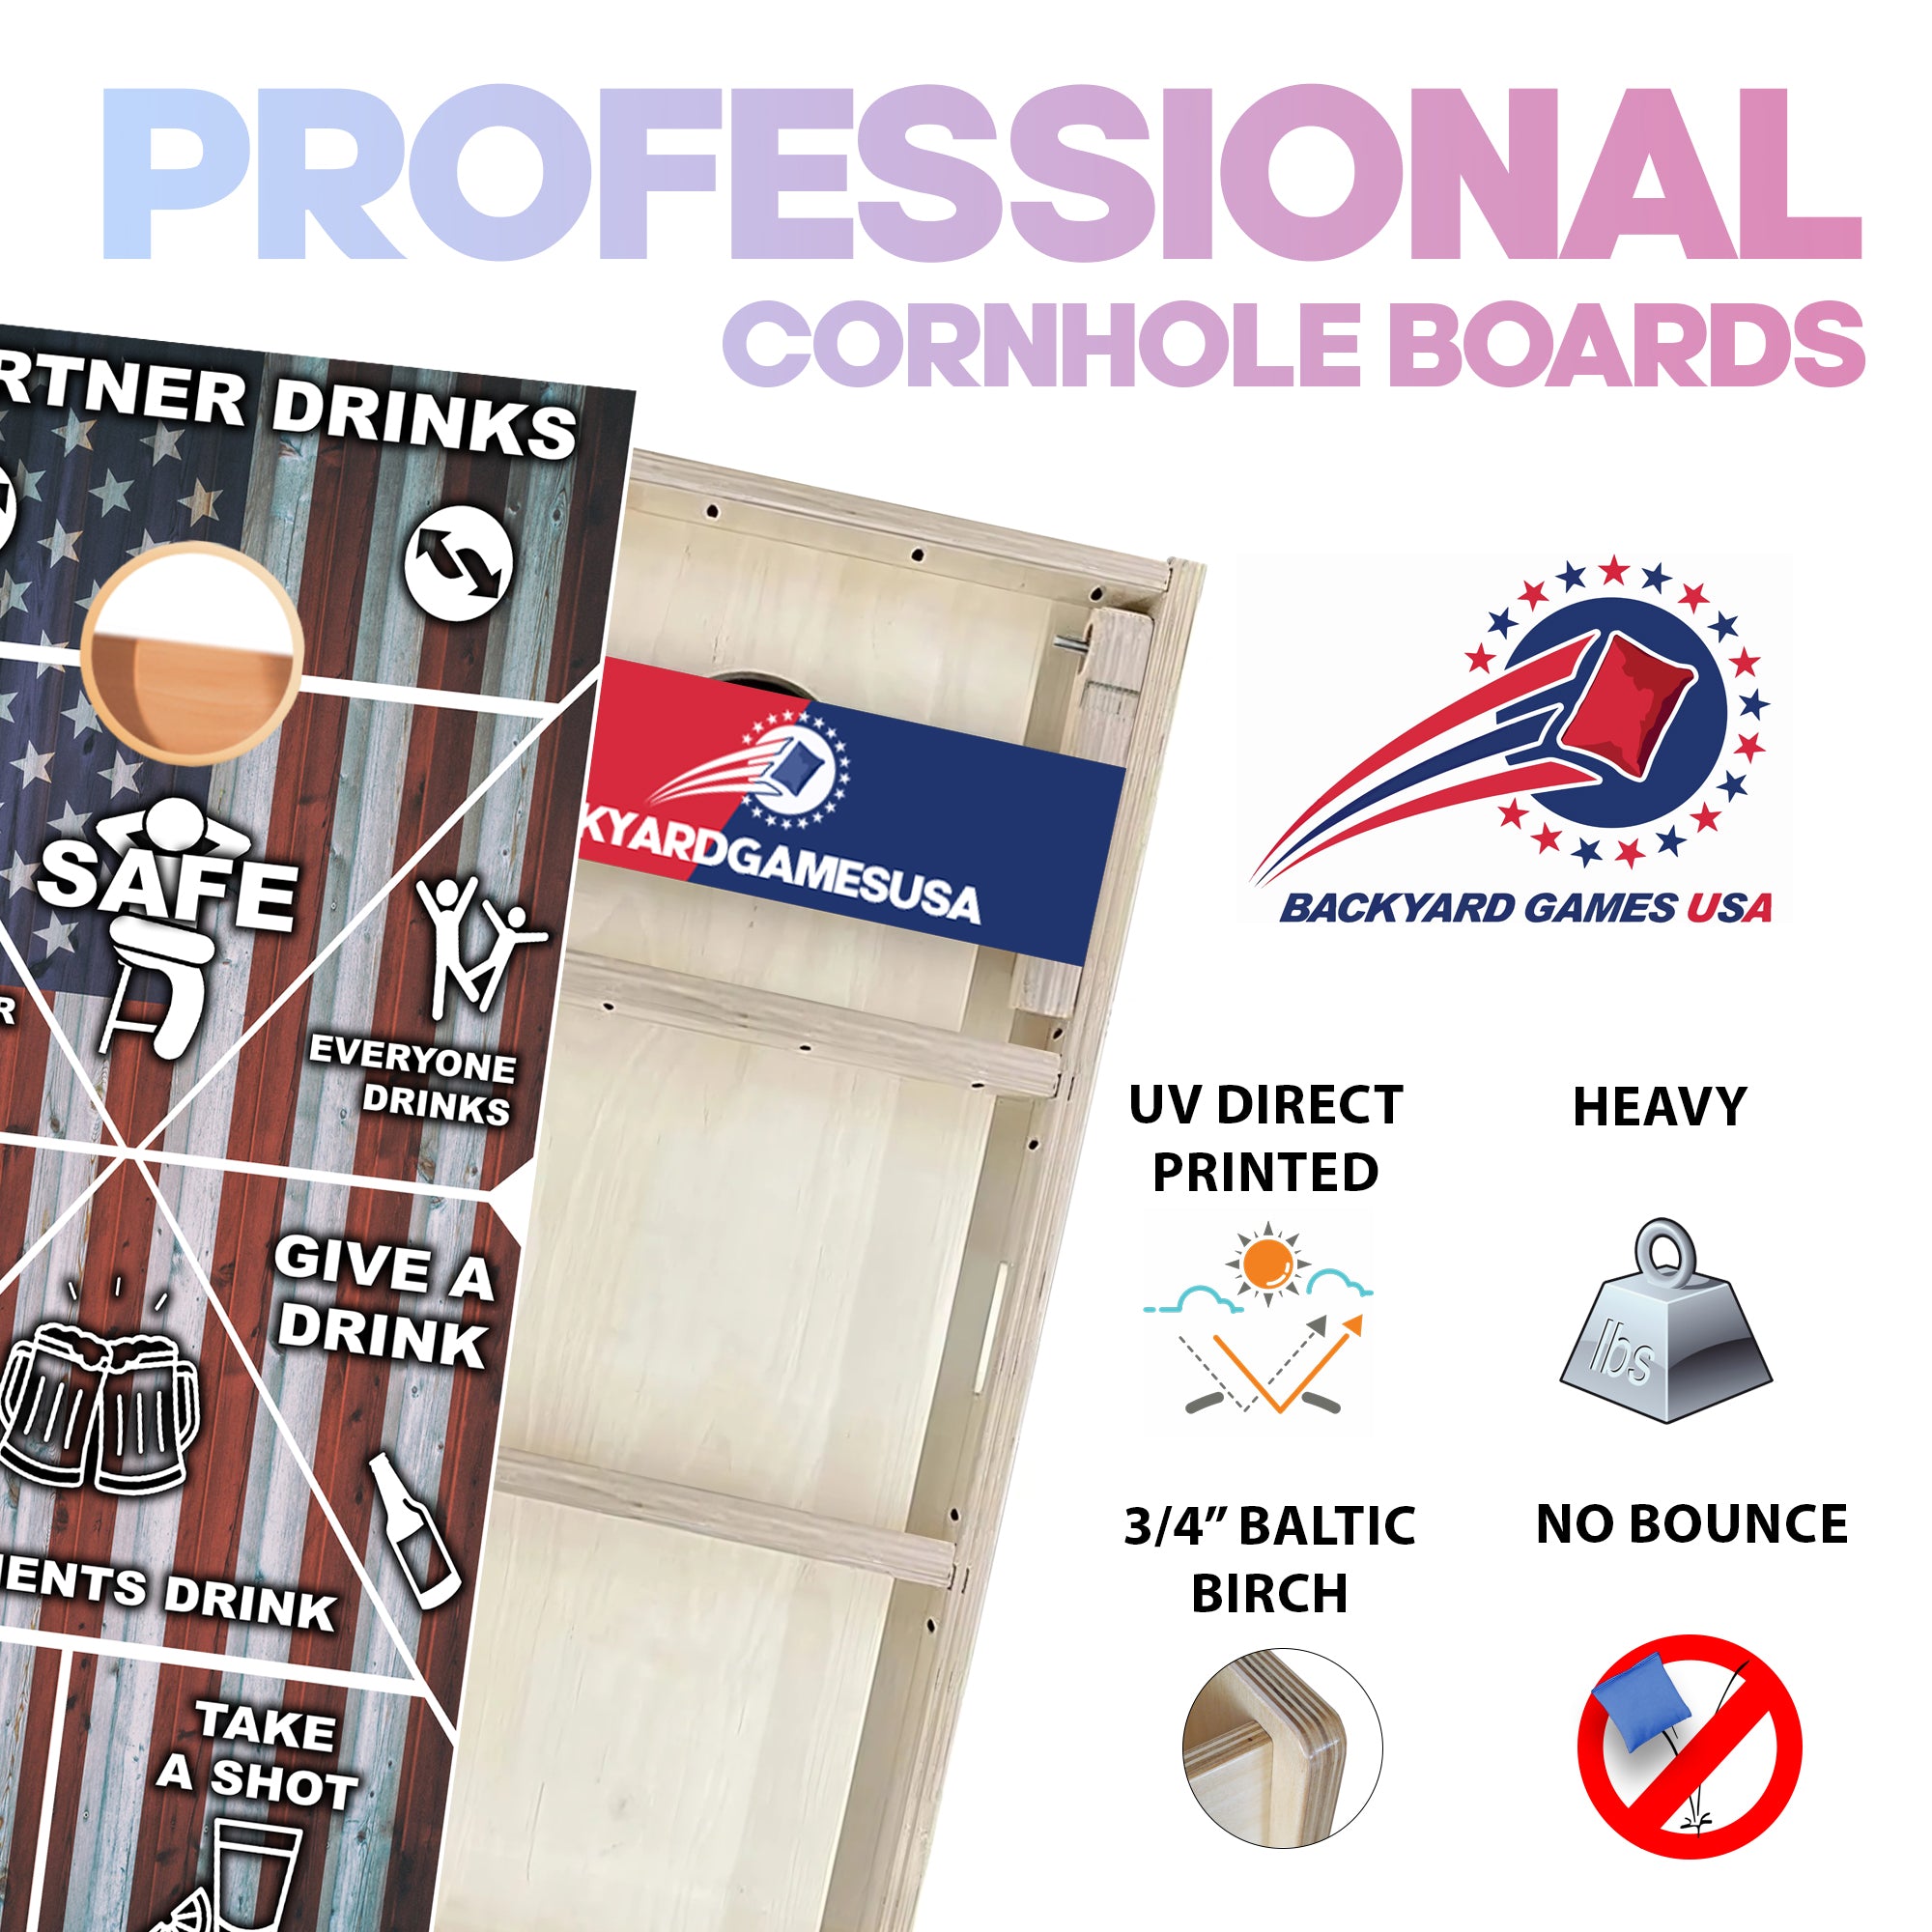 USA Drinking Professional Cornhole Boards